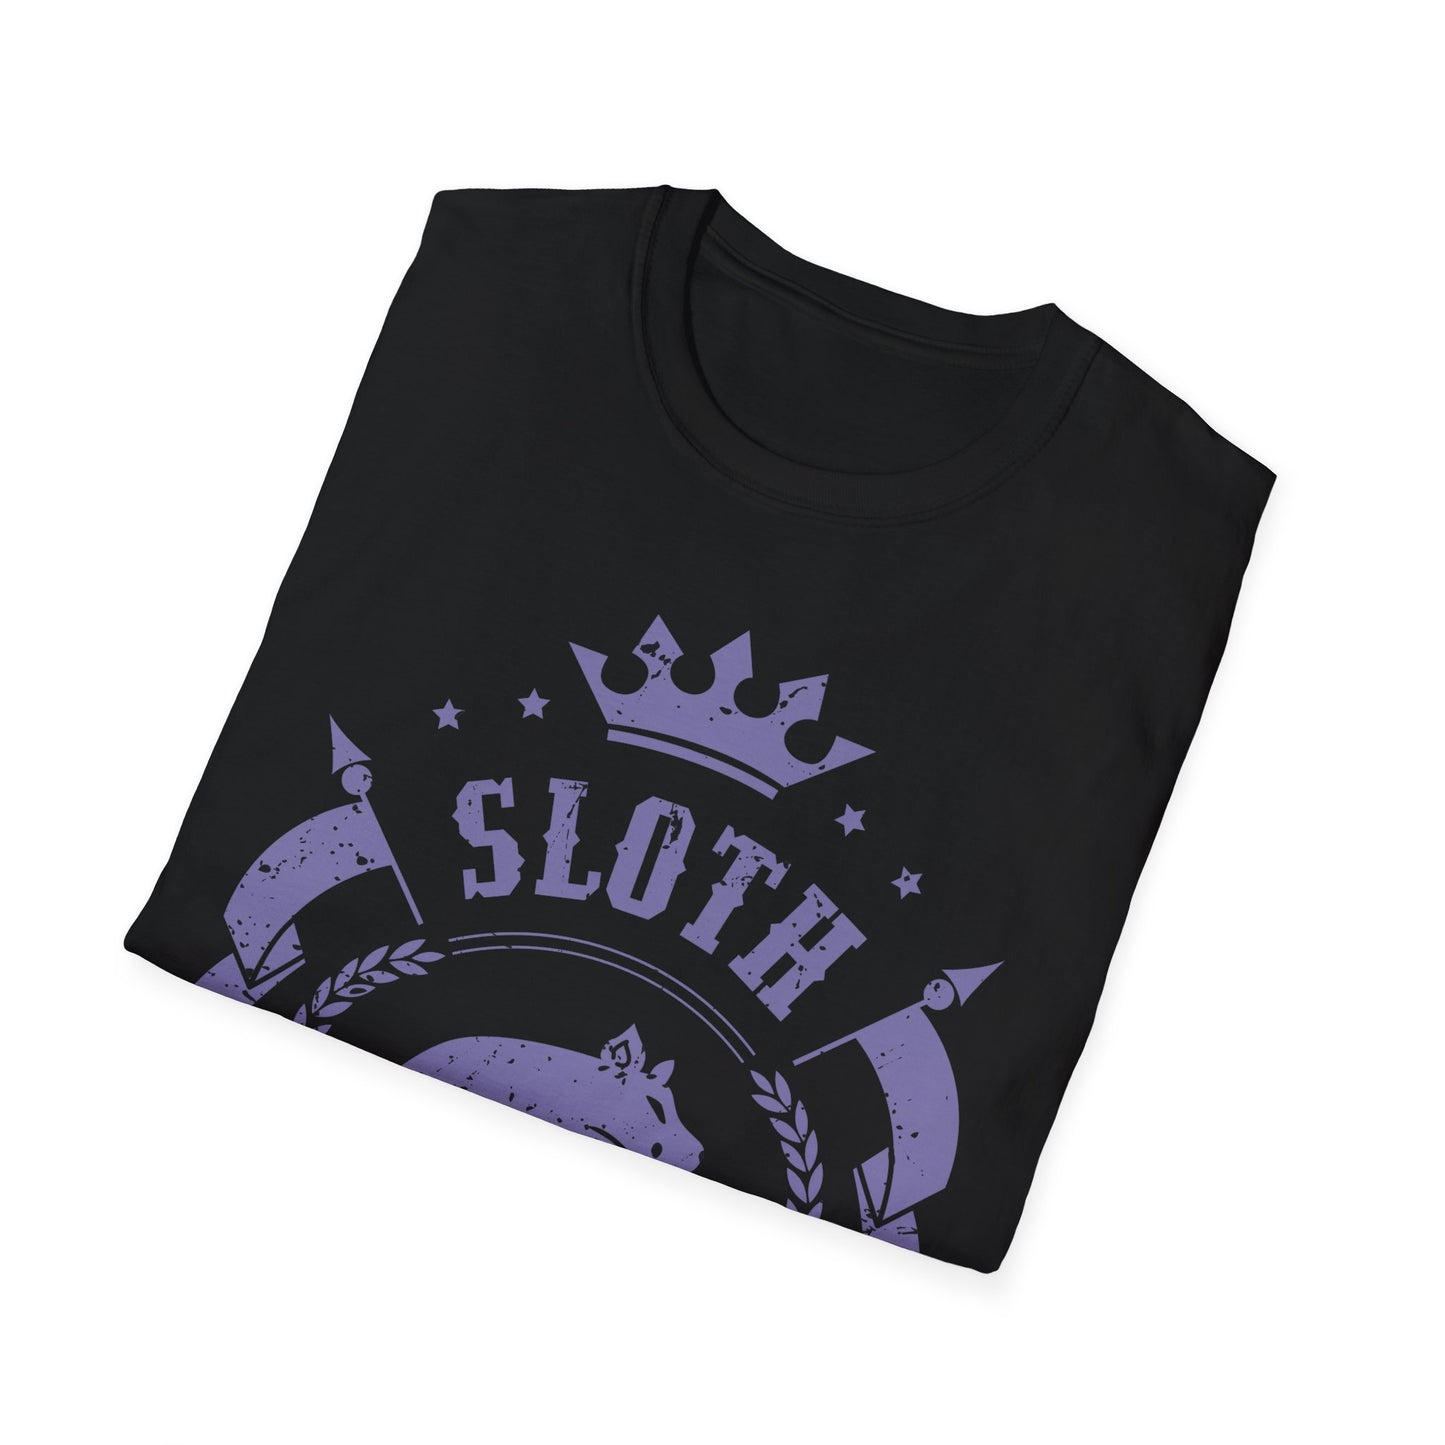 The Sin of Sloth Logo T-Shirt